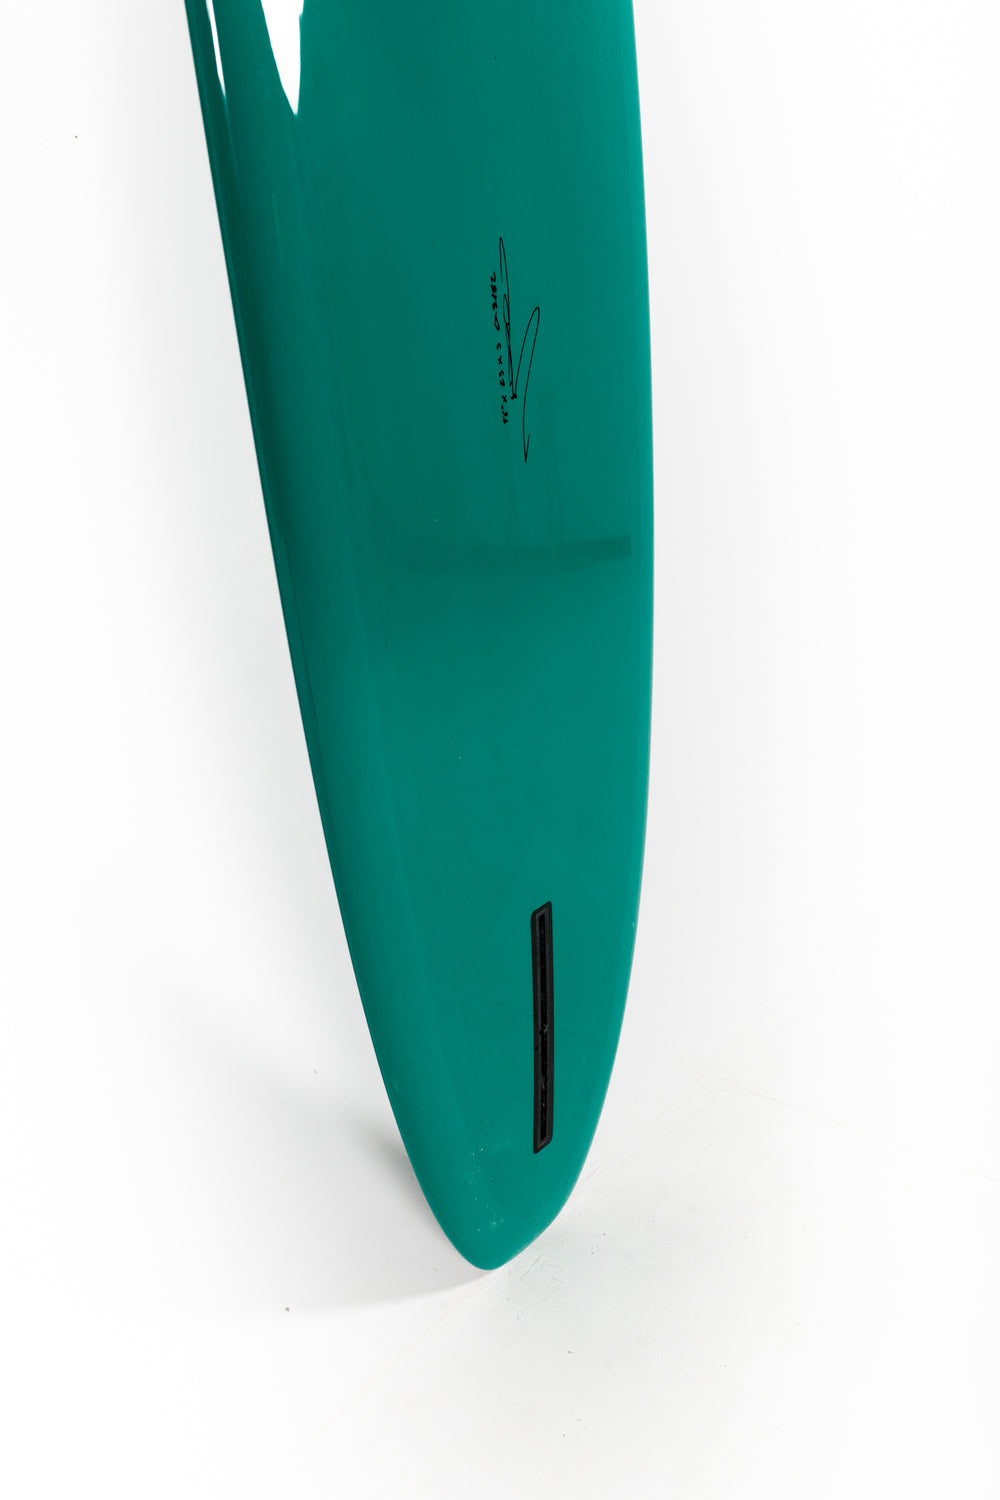 Christenson Surfboard - BANDITO by Chris Christenson - 9'6” x 23 x 